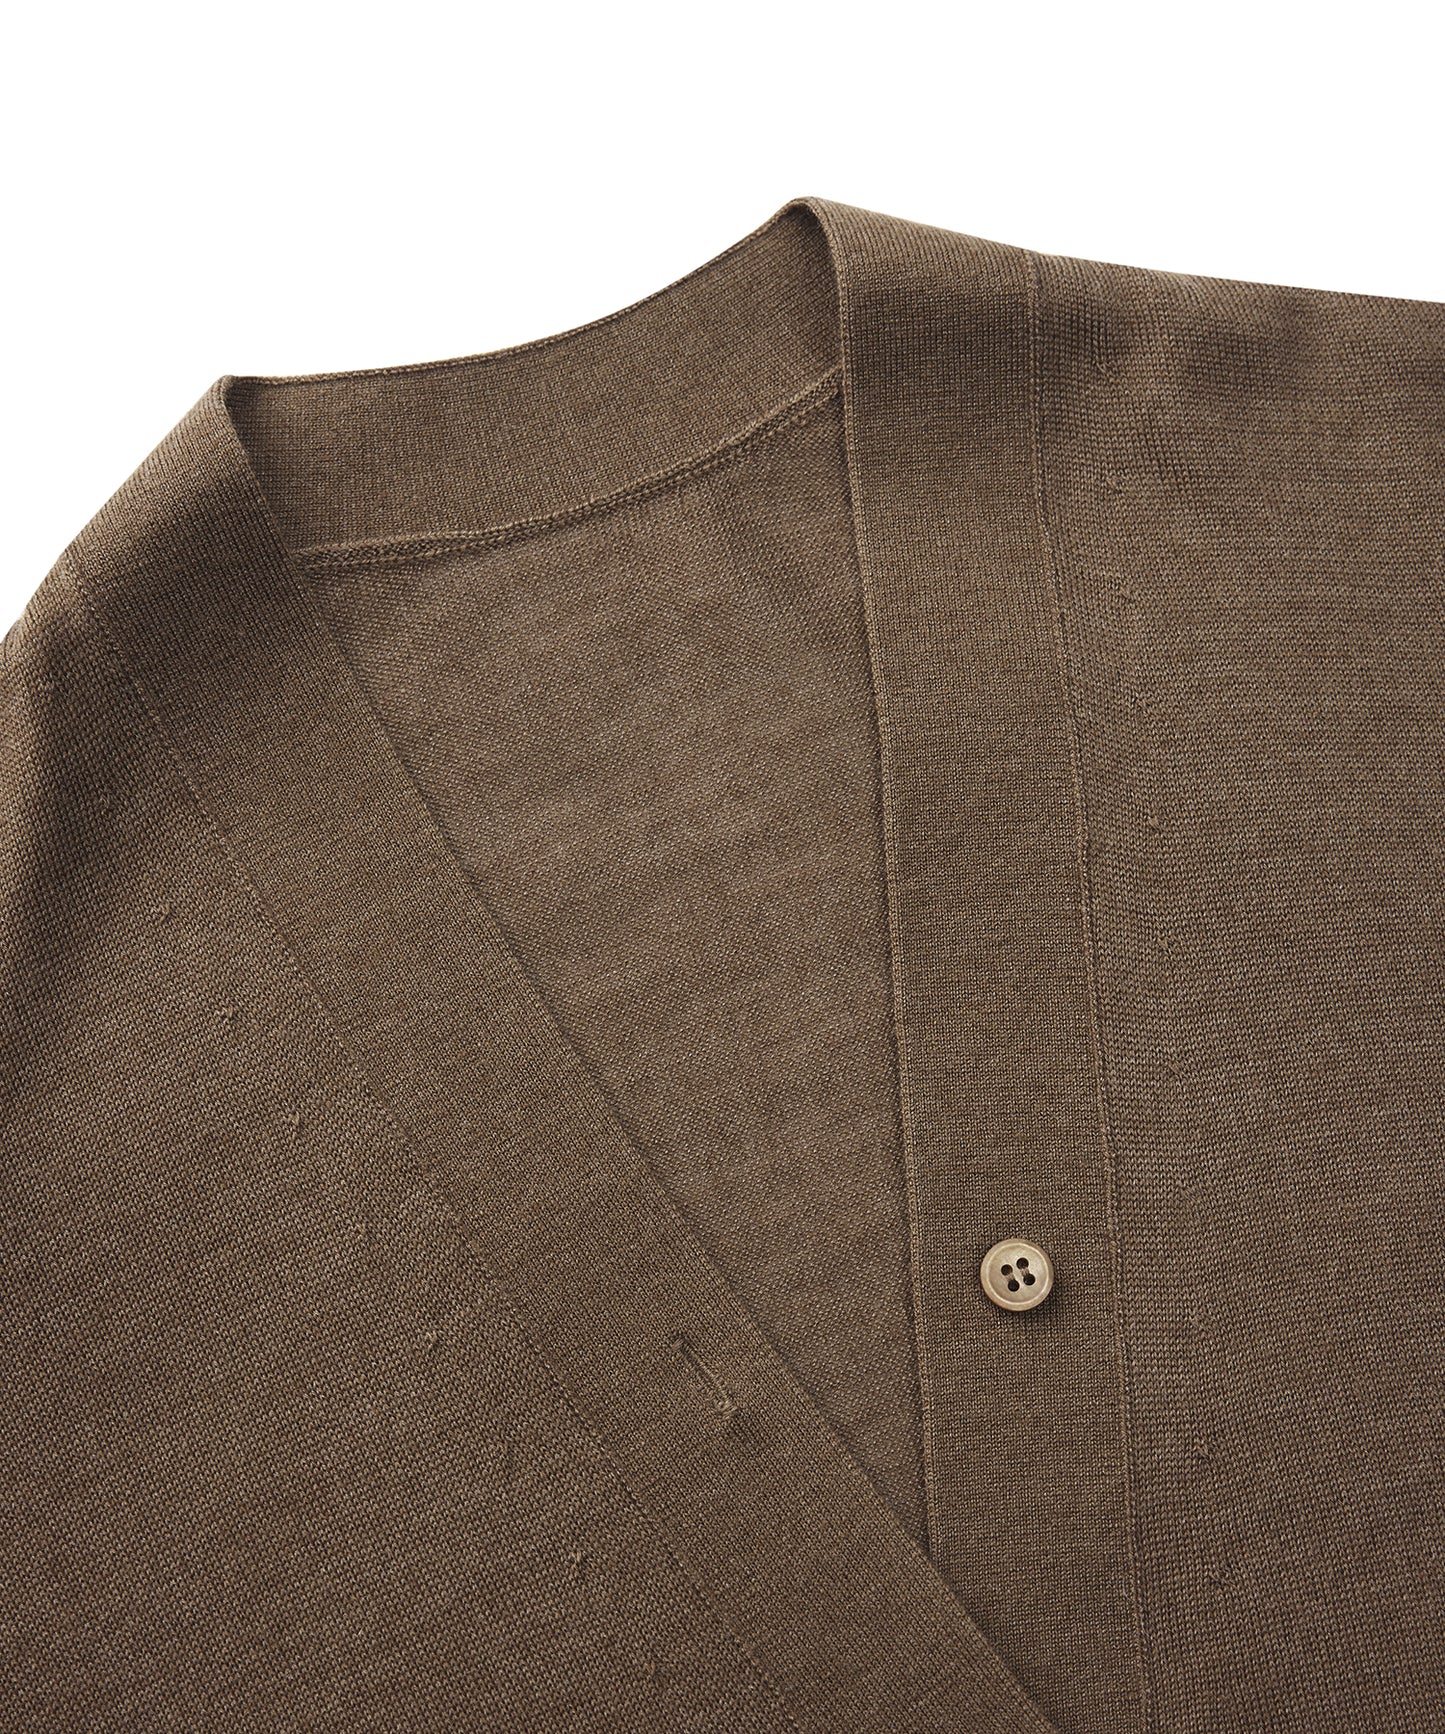 Classic V-neck Short-sleeved Wool-blend Cardigan